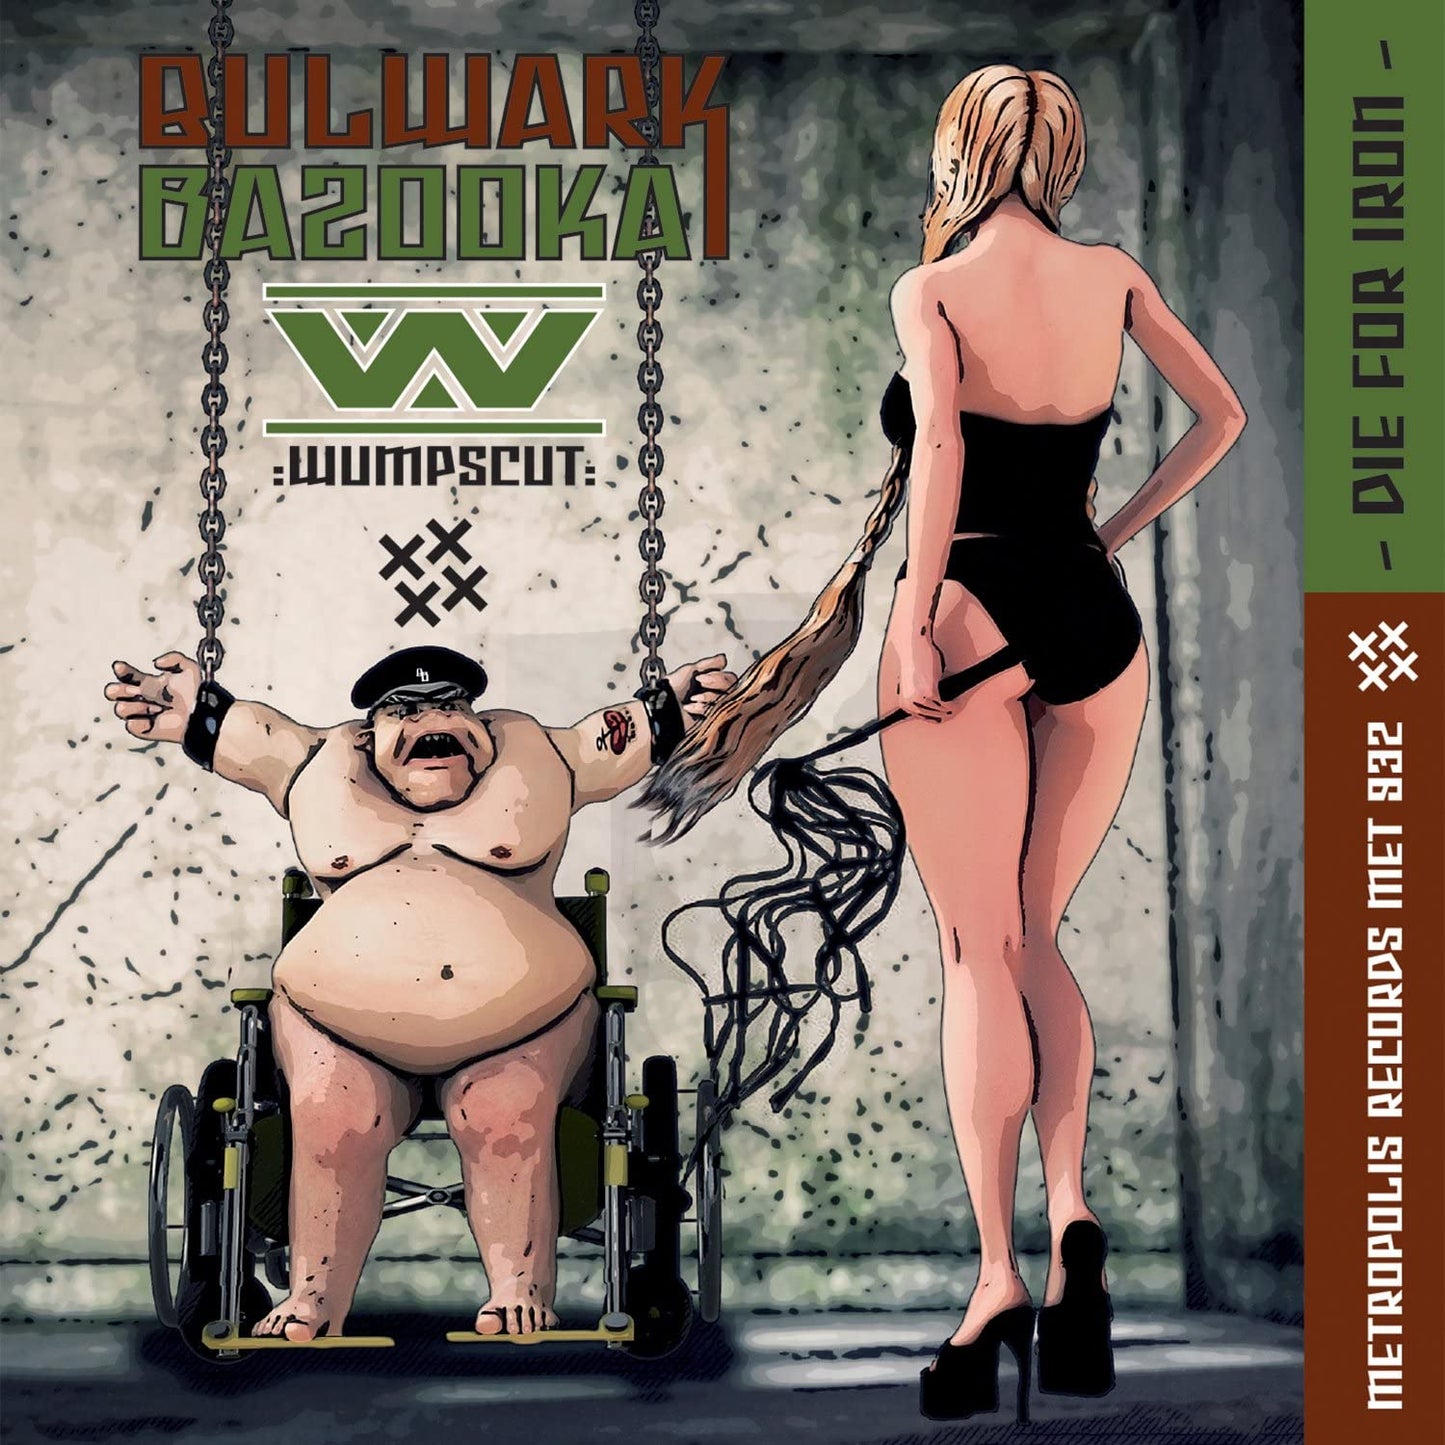 Wumpscut - Bulwark Bazooka - USED CD